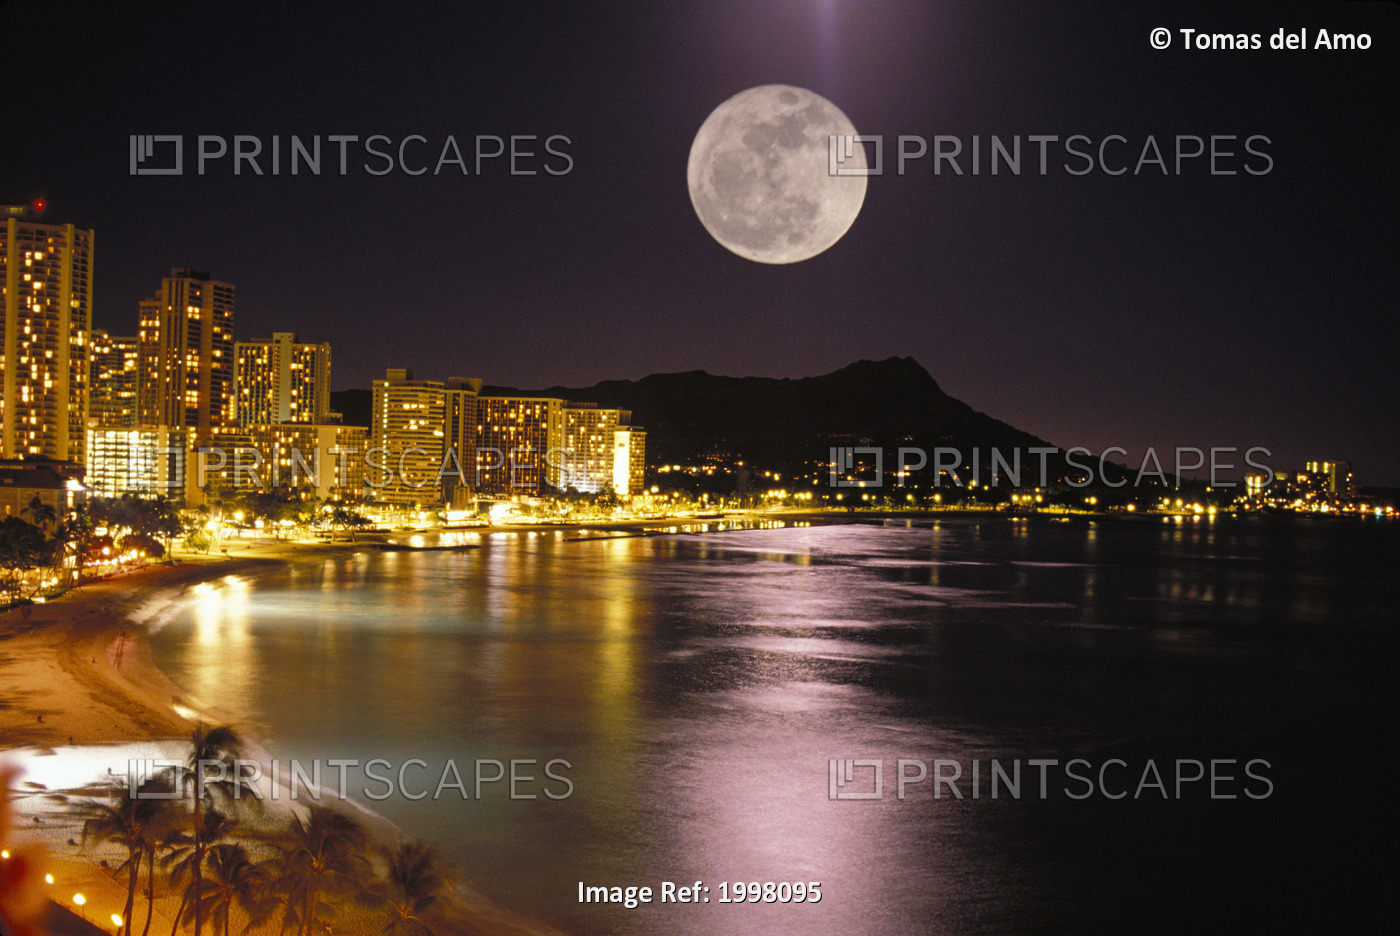 Hawaii, Oahu, Diamond Head, Waikiki Beach, Full Moon Reflecting, City Lights